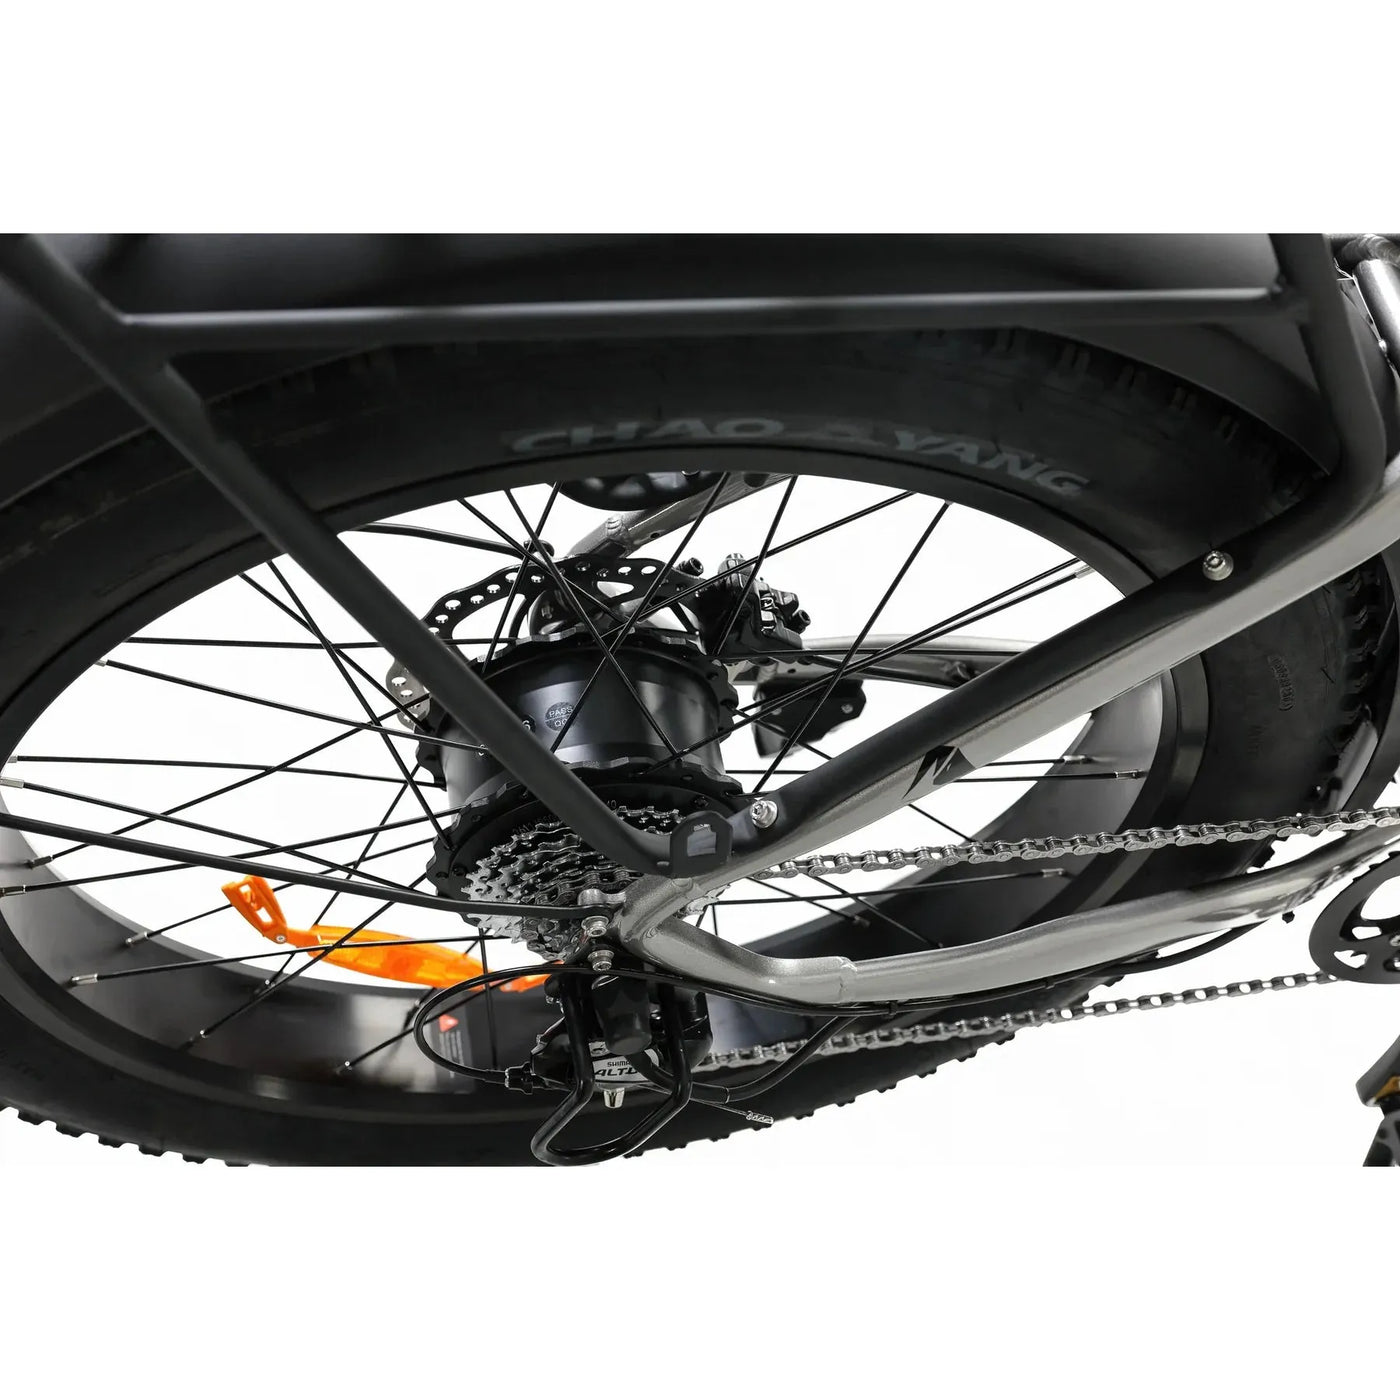 Mamba Gallivanter Fat Tyre Electric Bike 48V 750W 15AH LG BATTERY 6 Months Free service